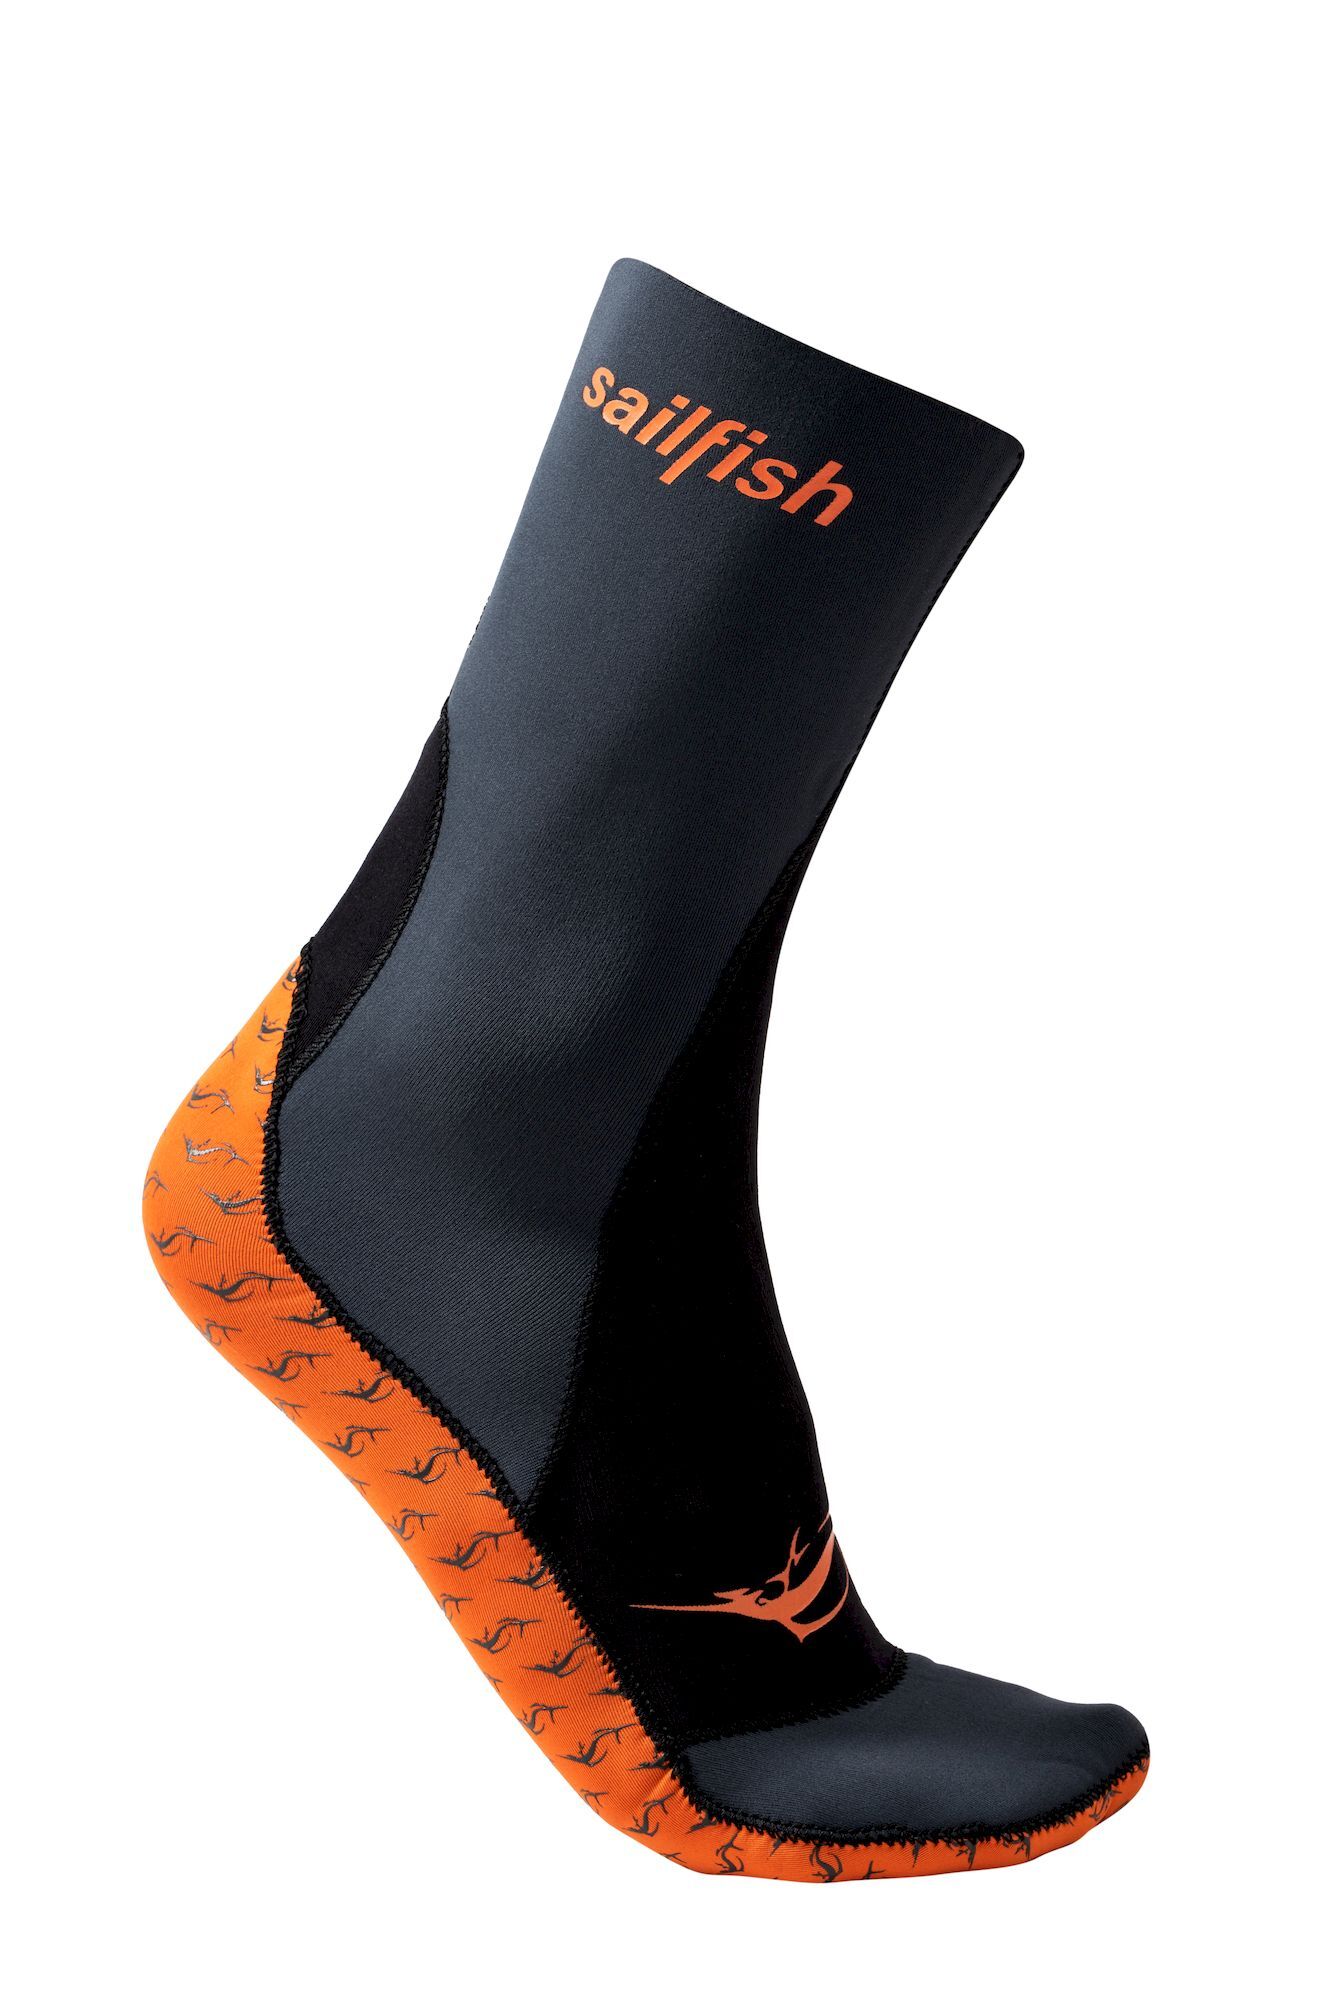 Sailfish Neoprene Socks - Calcetines neopreno